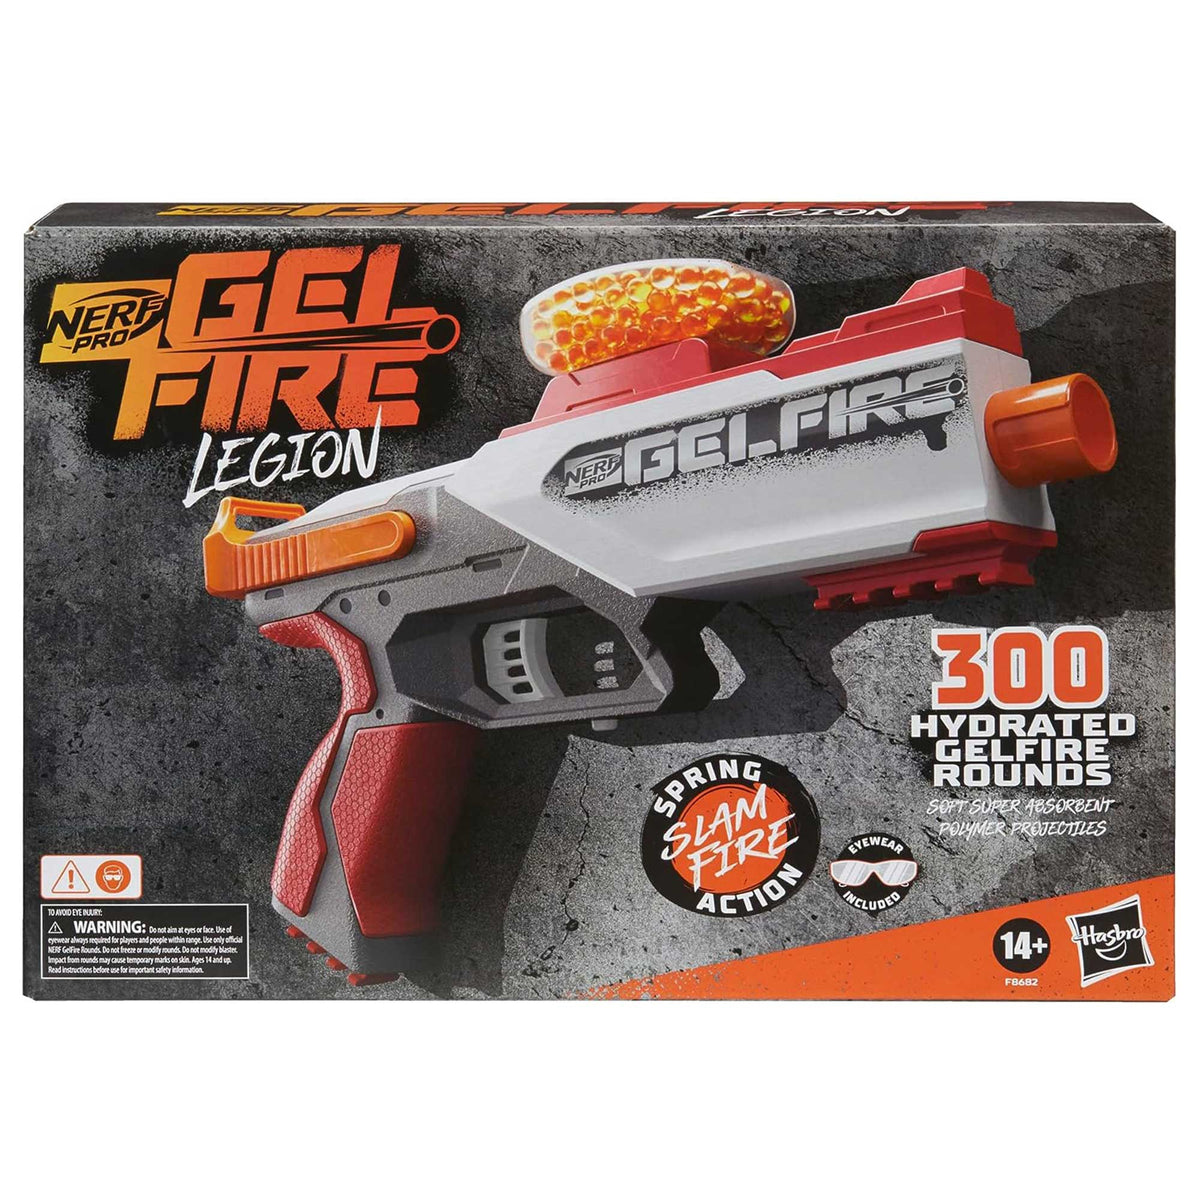 NERF Pro Gelfire Legion Blaster